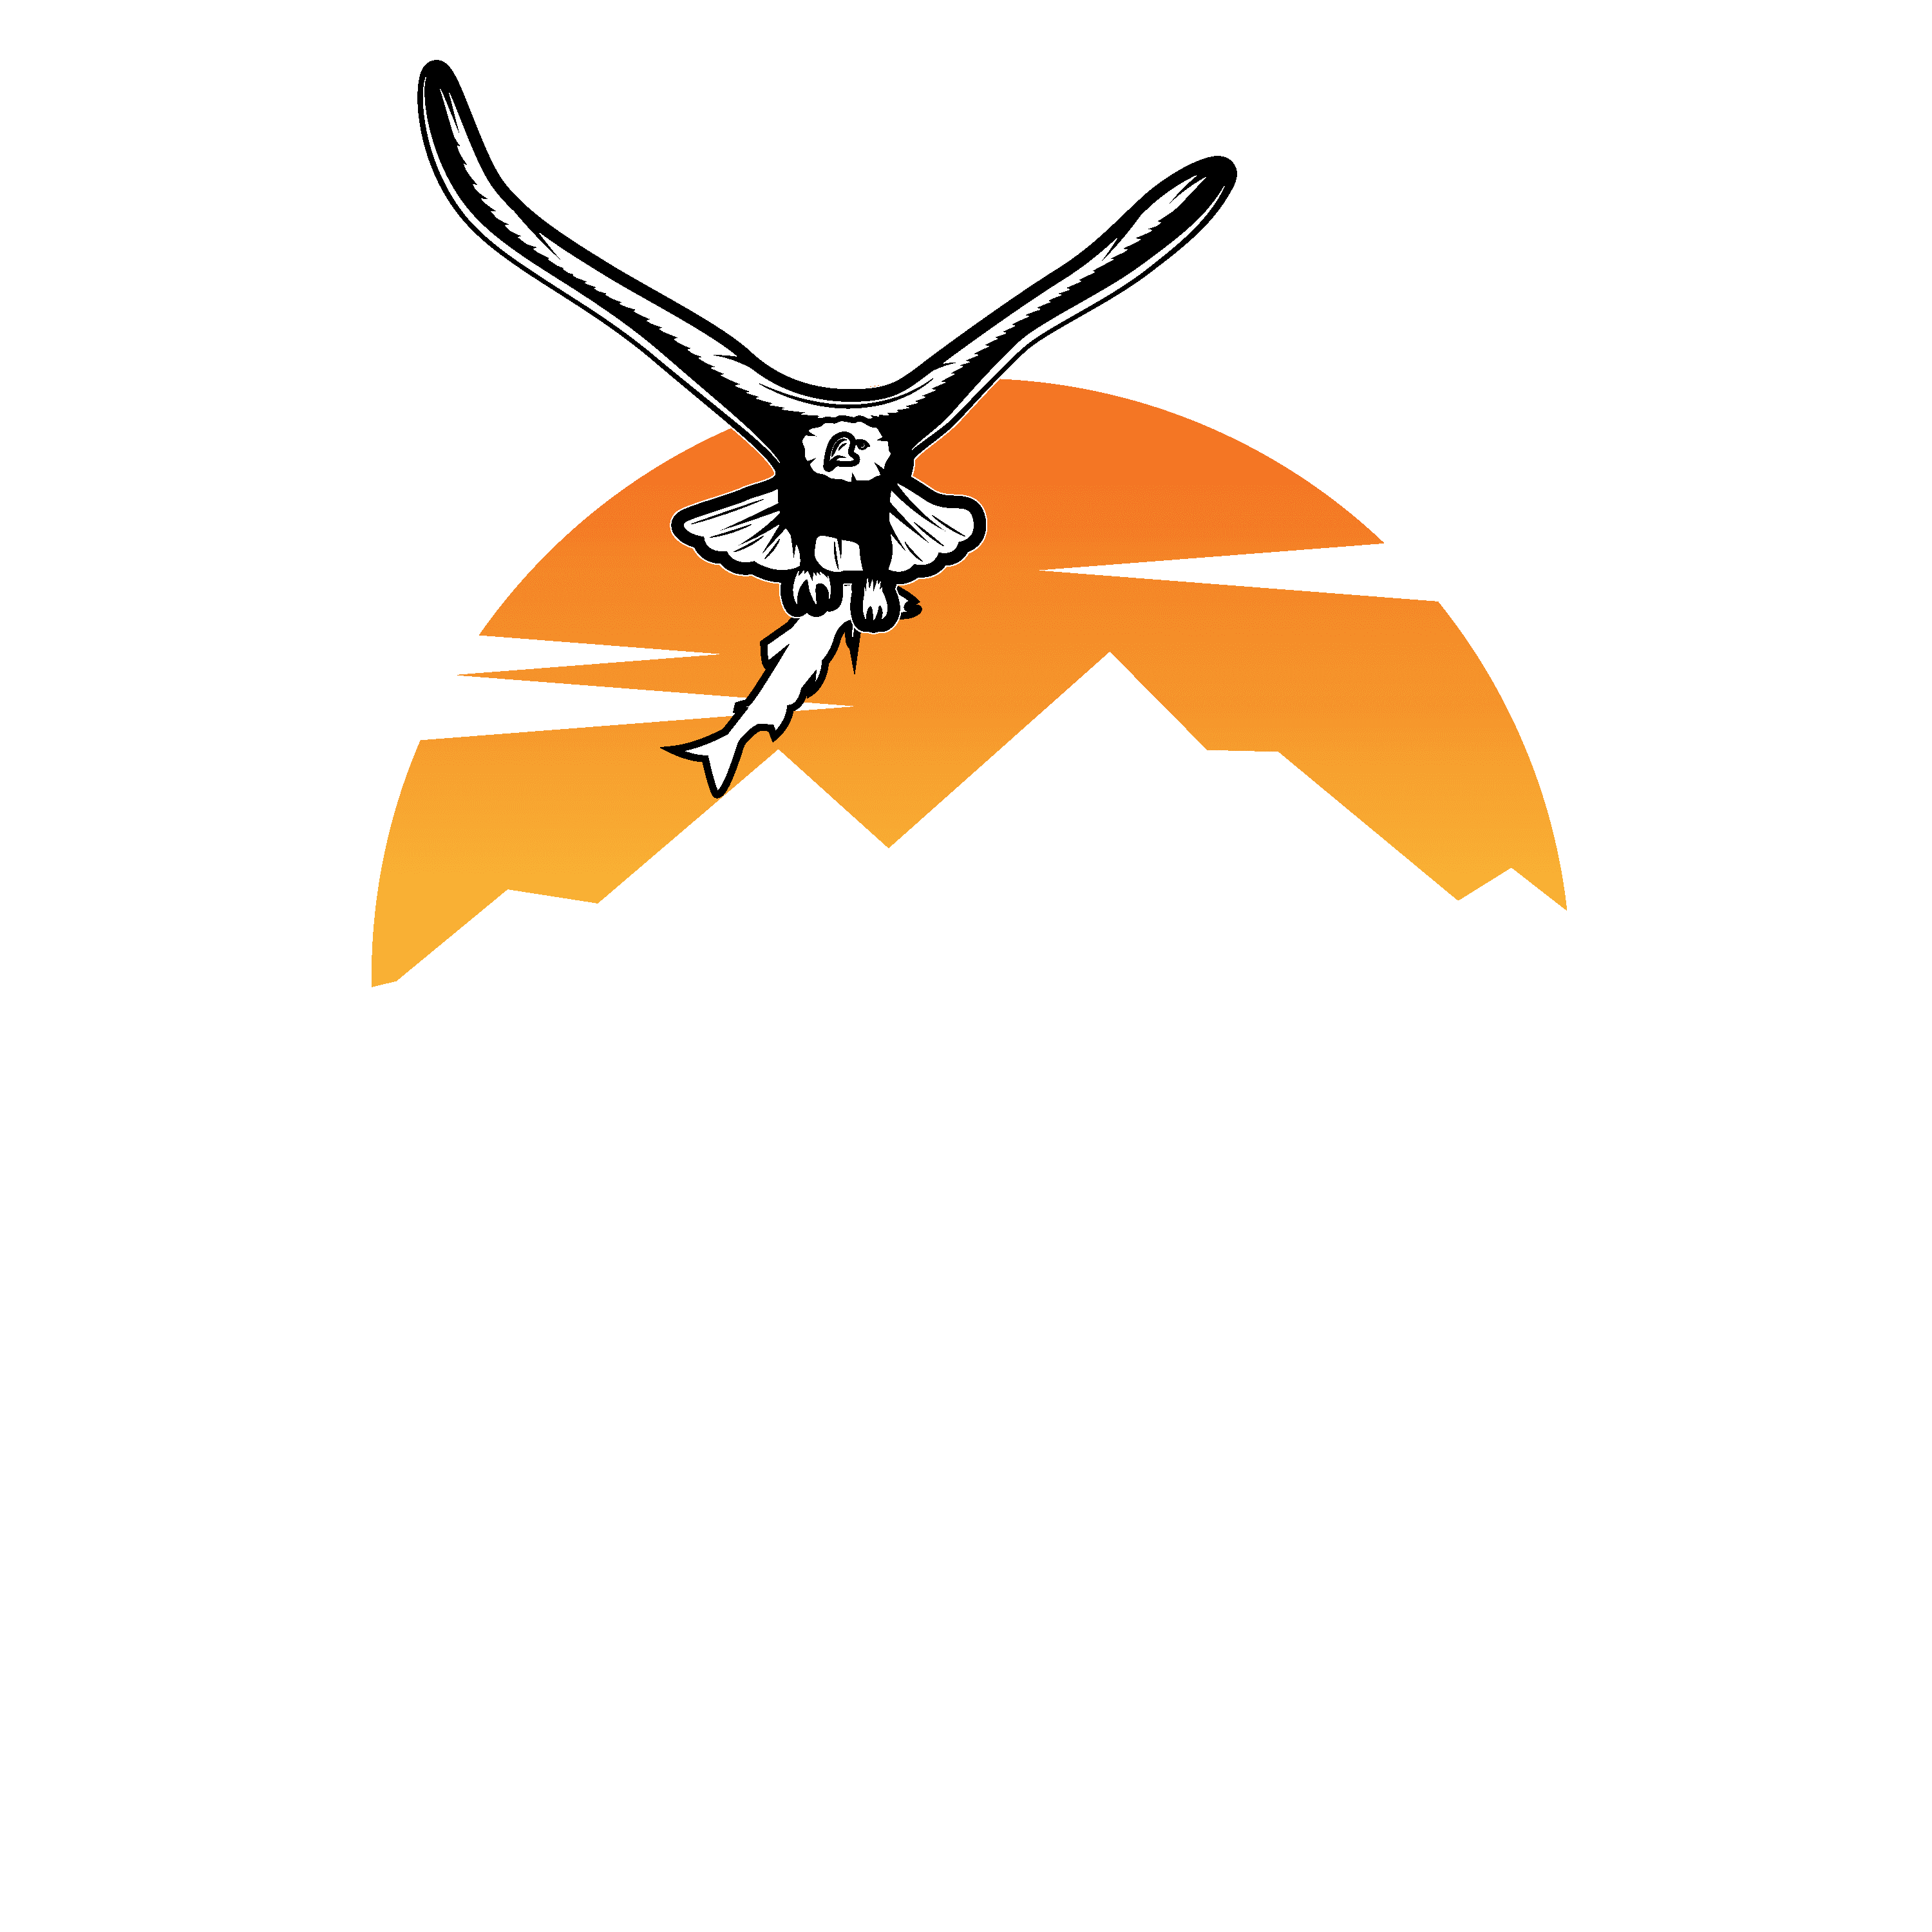 Capture Wild Alaska